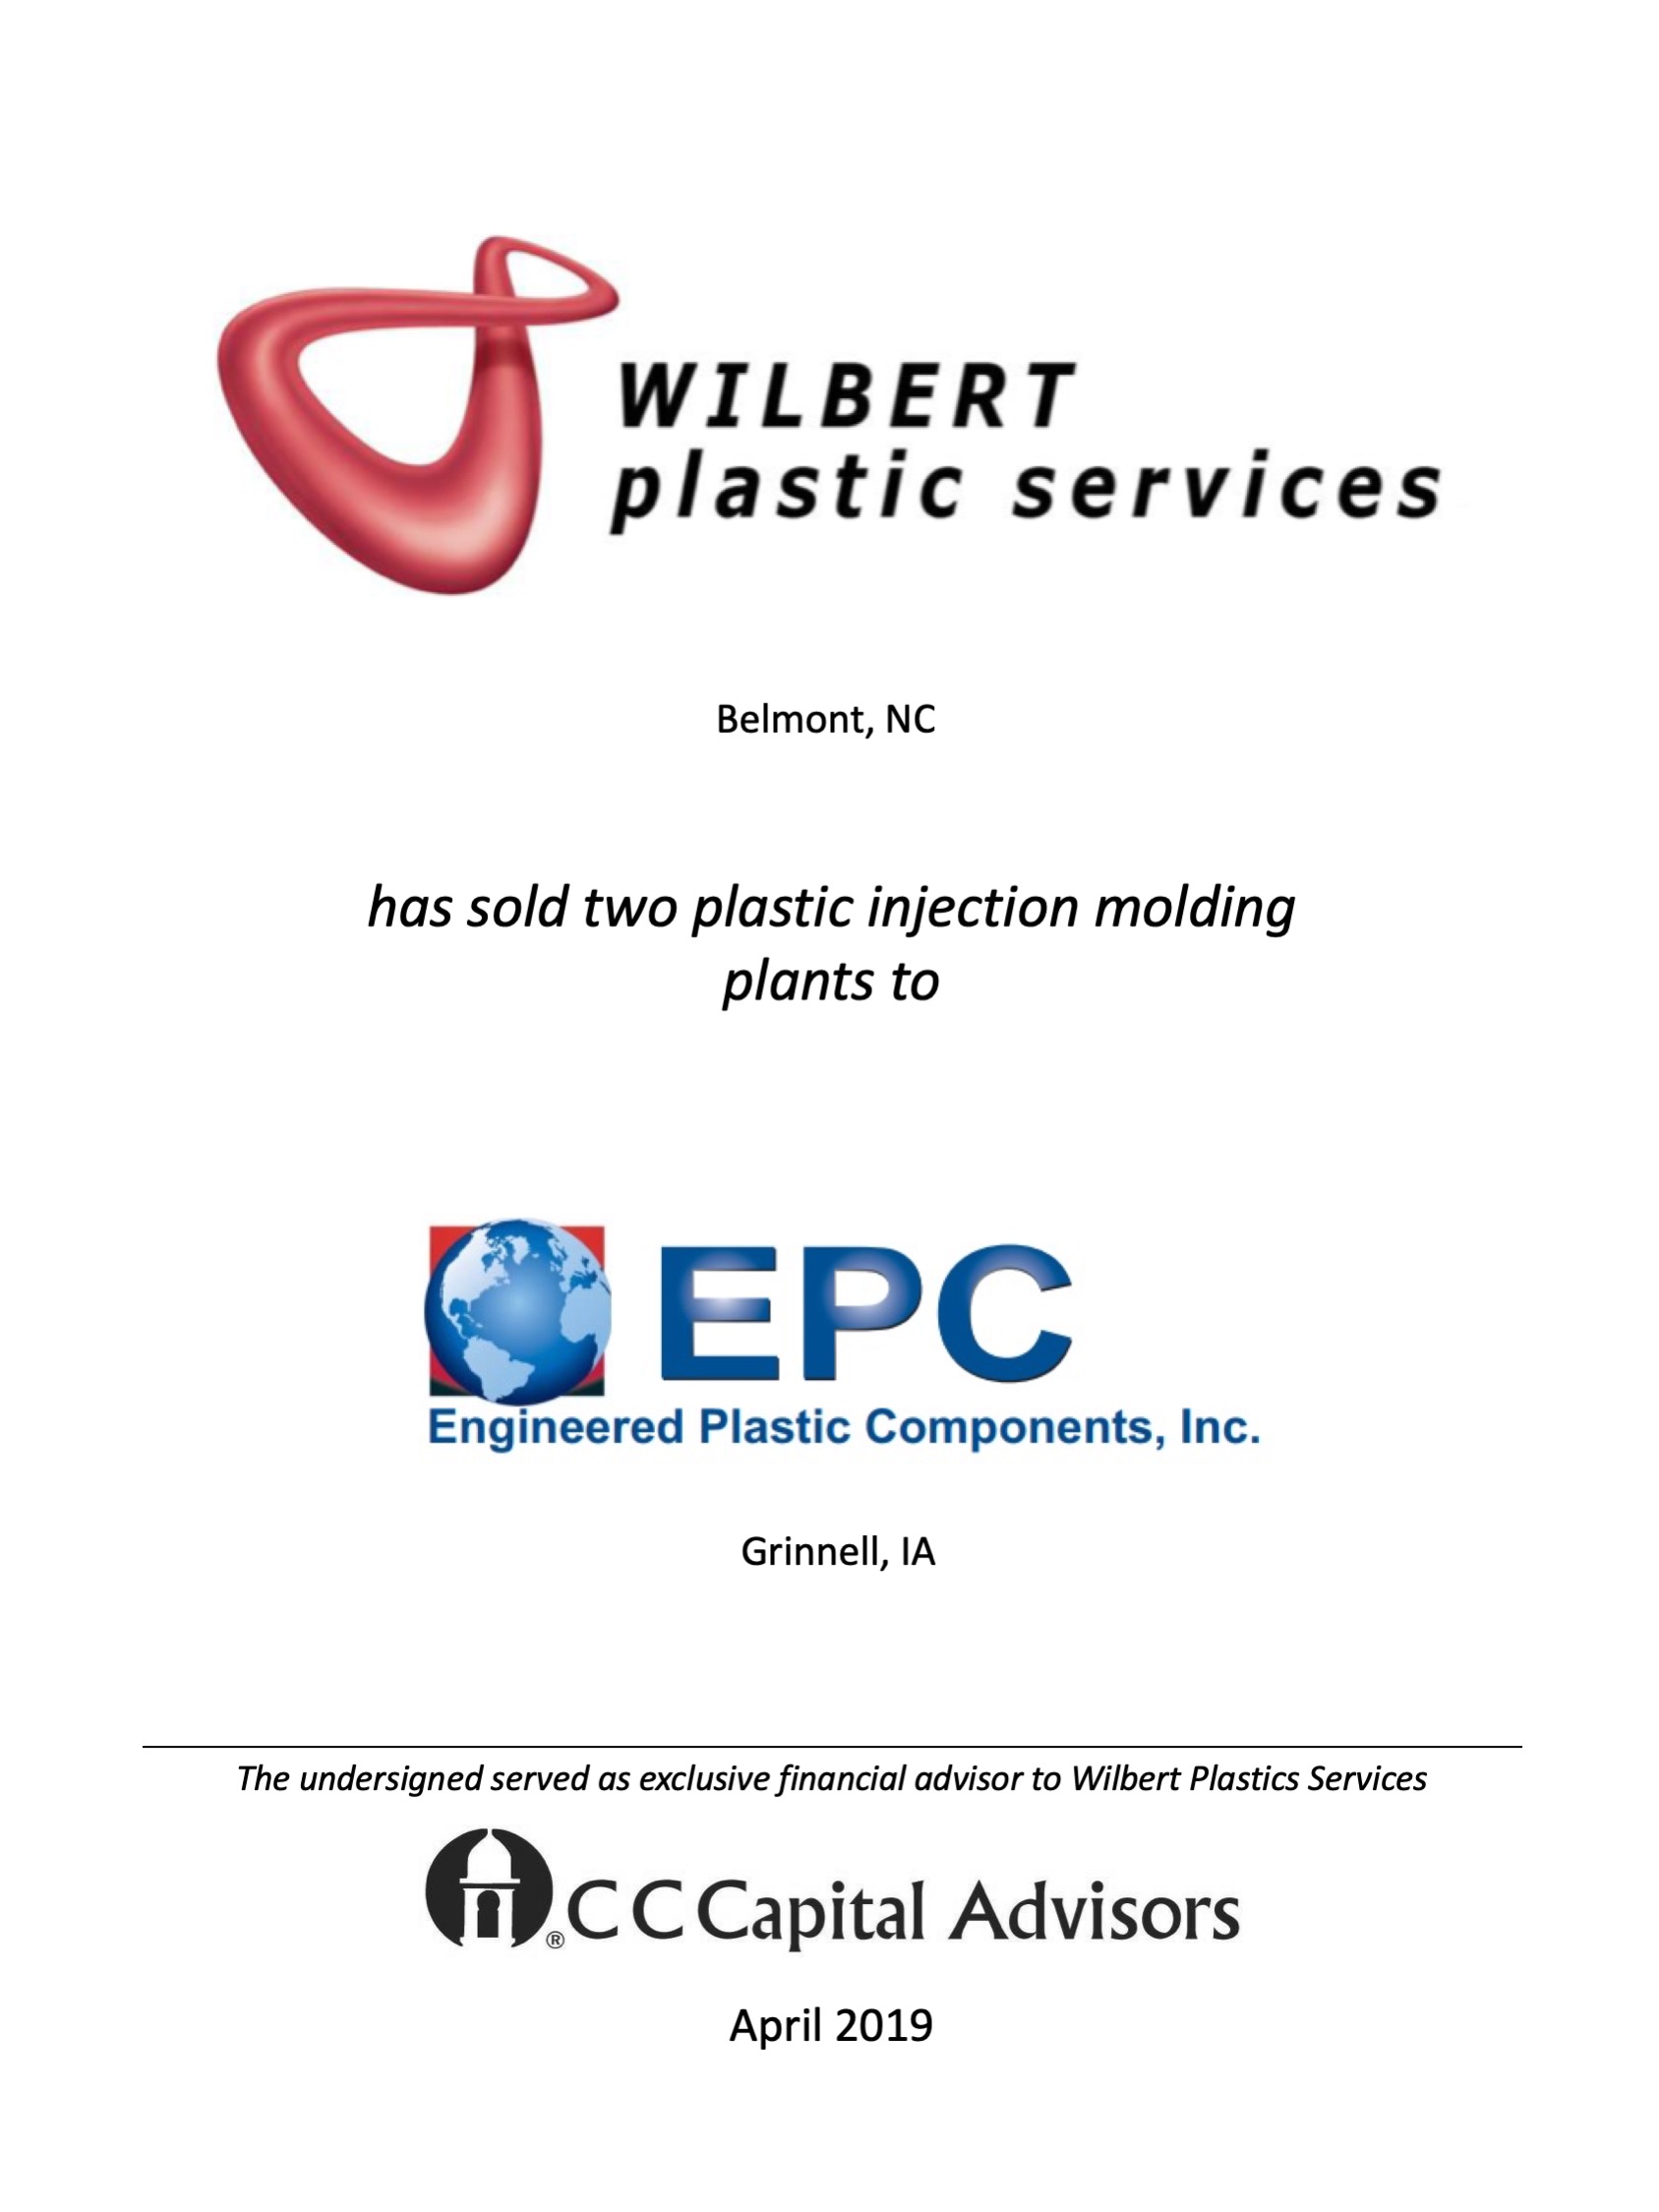 Wilbert Plastic Services transaction